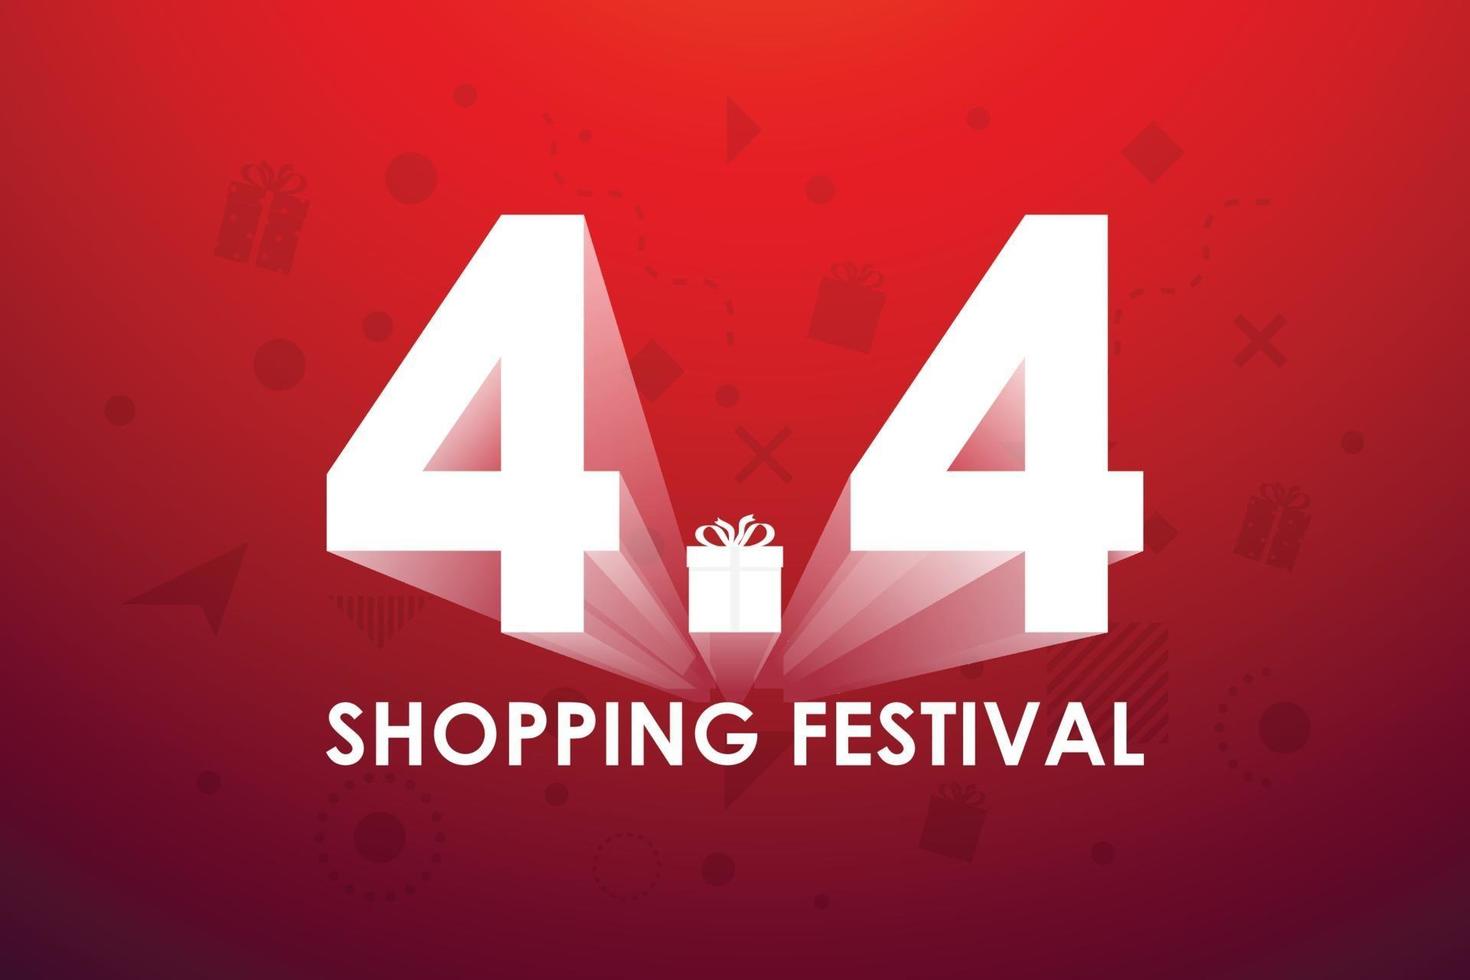 4.4 shopping festival, toespraak marketing bannerontwerp op rode achtergrond. vector illustratie